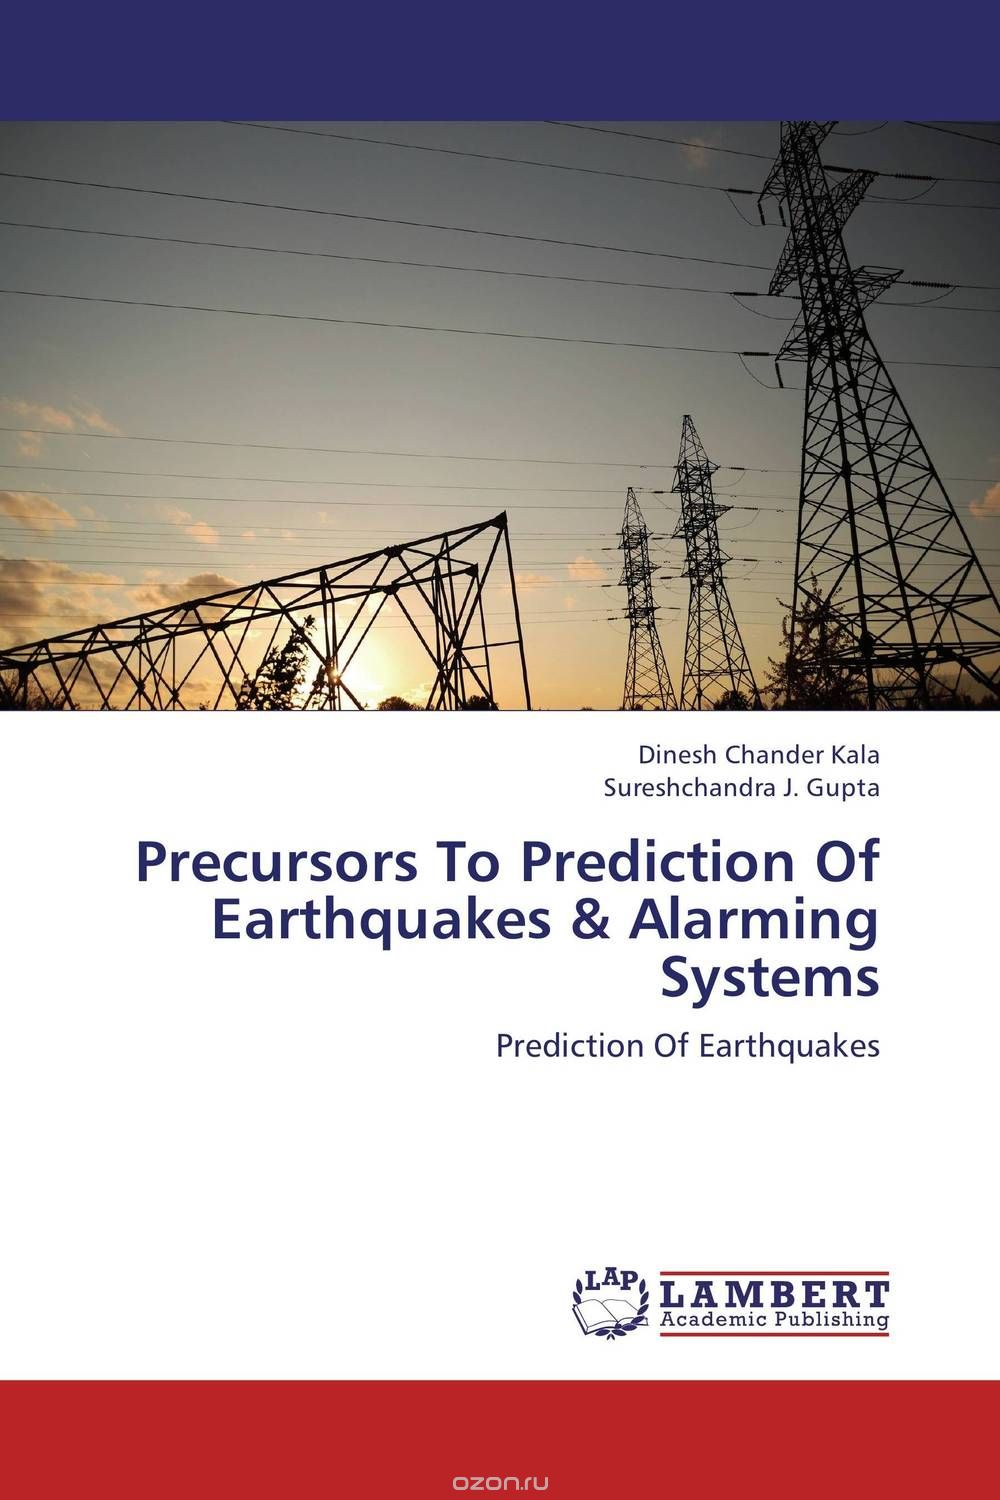 Скачать книгу "Precursors To Prediction Of Earthquakes & Alarming Systems"